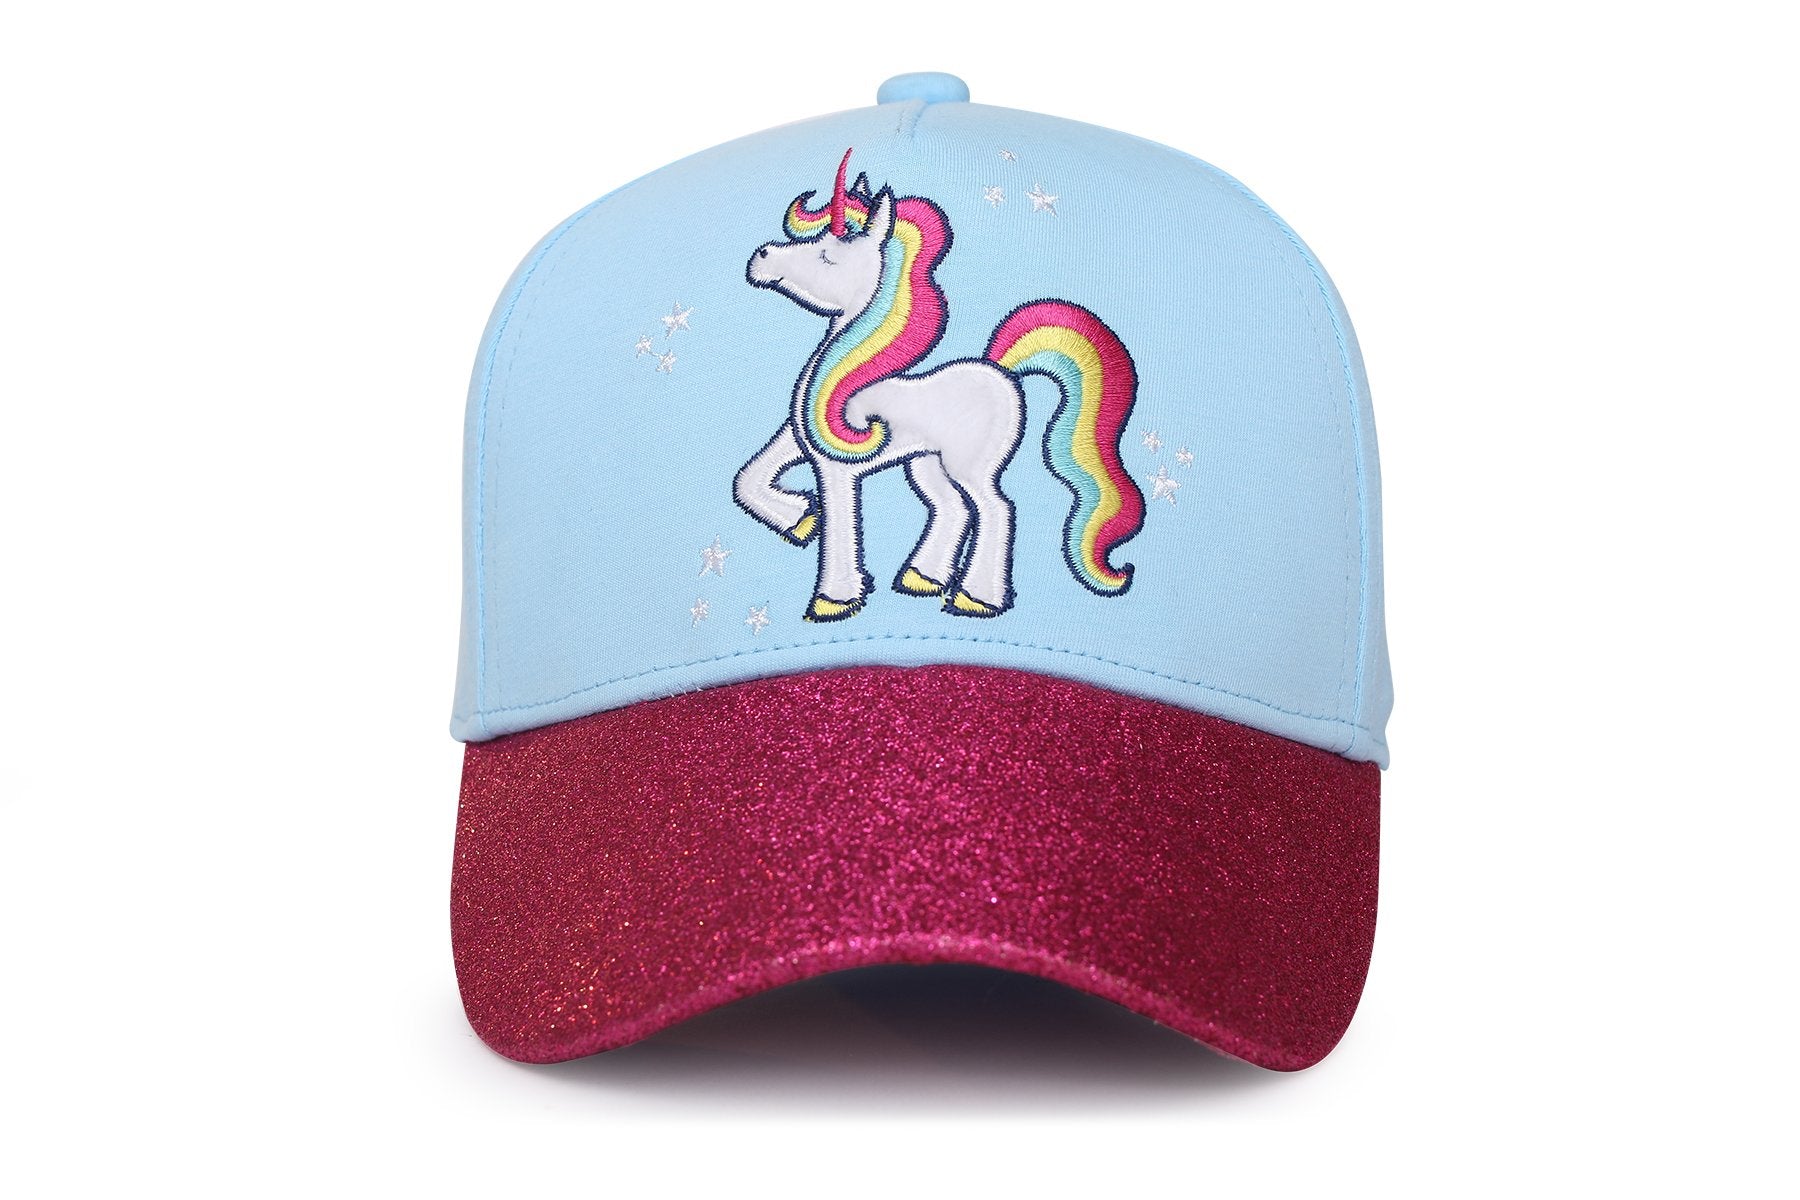 FlapJackKids | Premium Kids & Toddler Sun Hats, Caps & Accessories